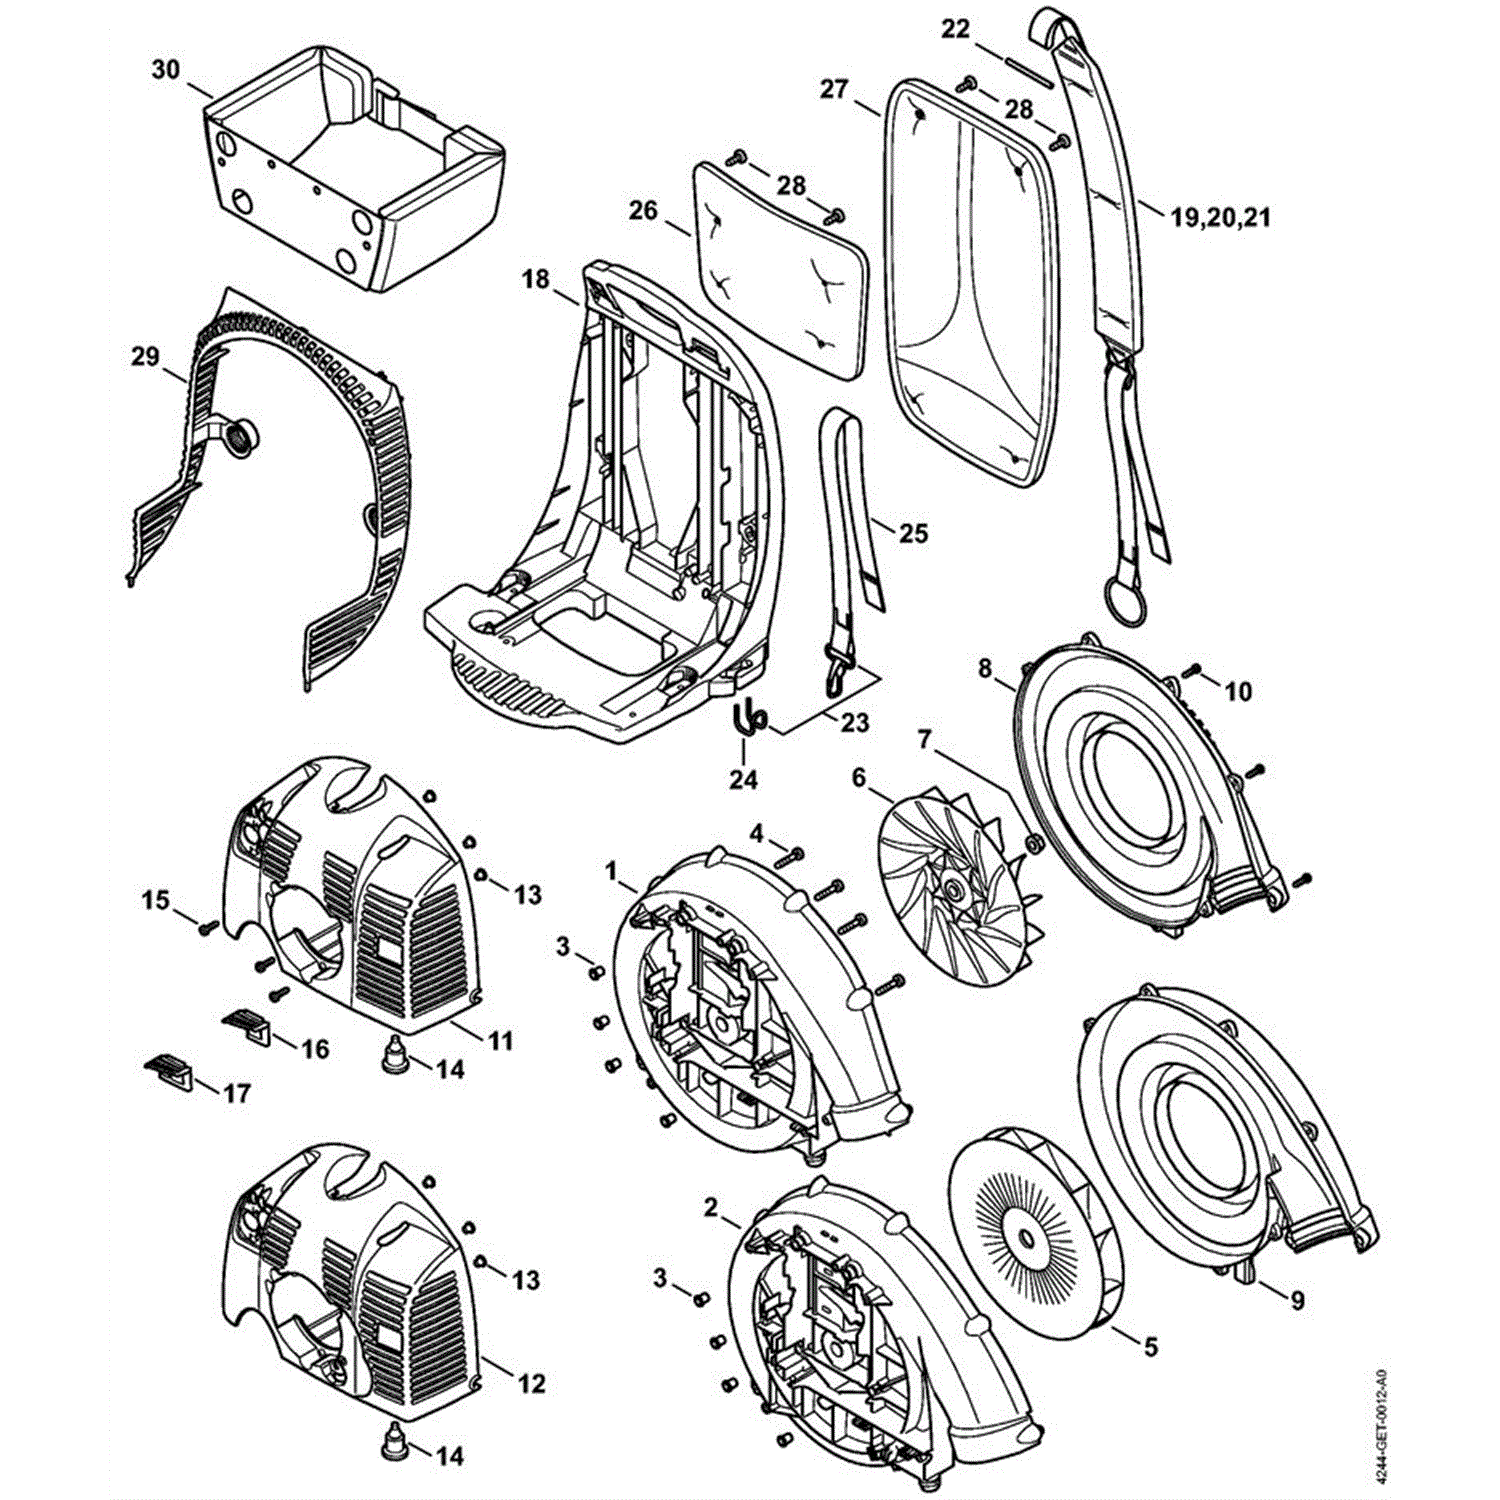 Stihl BR 450 CEF Backpack Blower (BR 450 CEF) Parts Diagram, H FAN